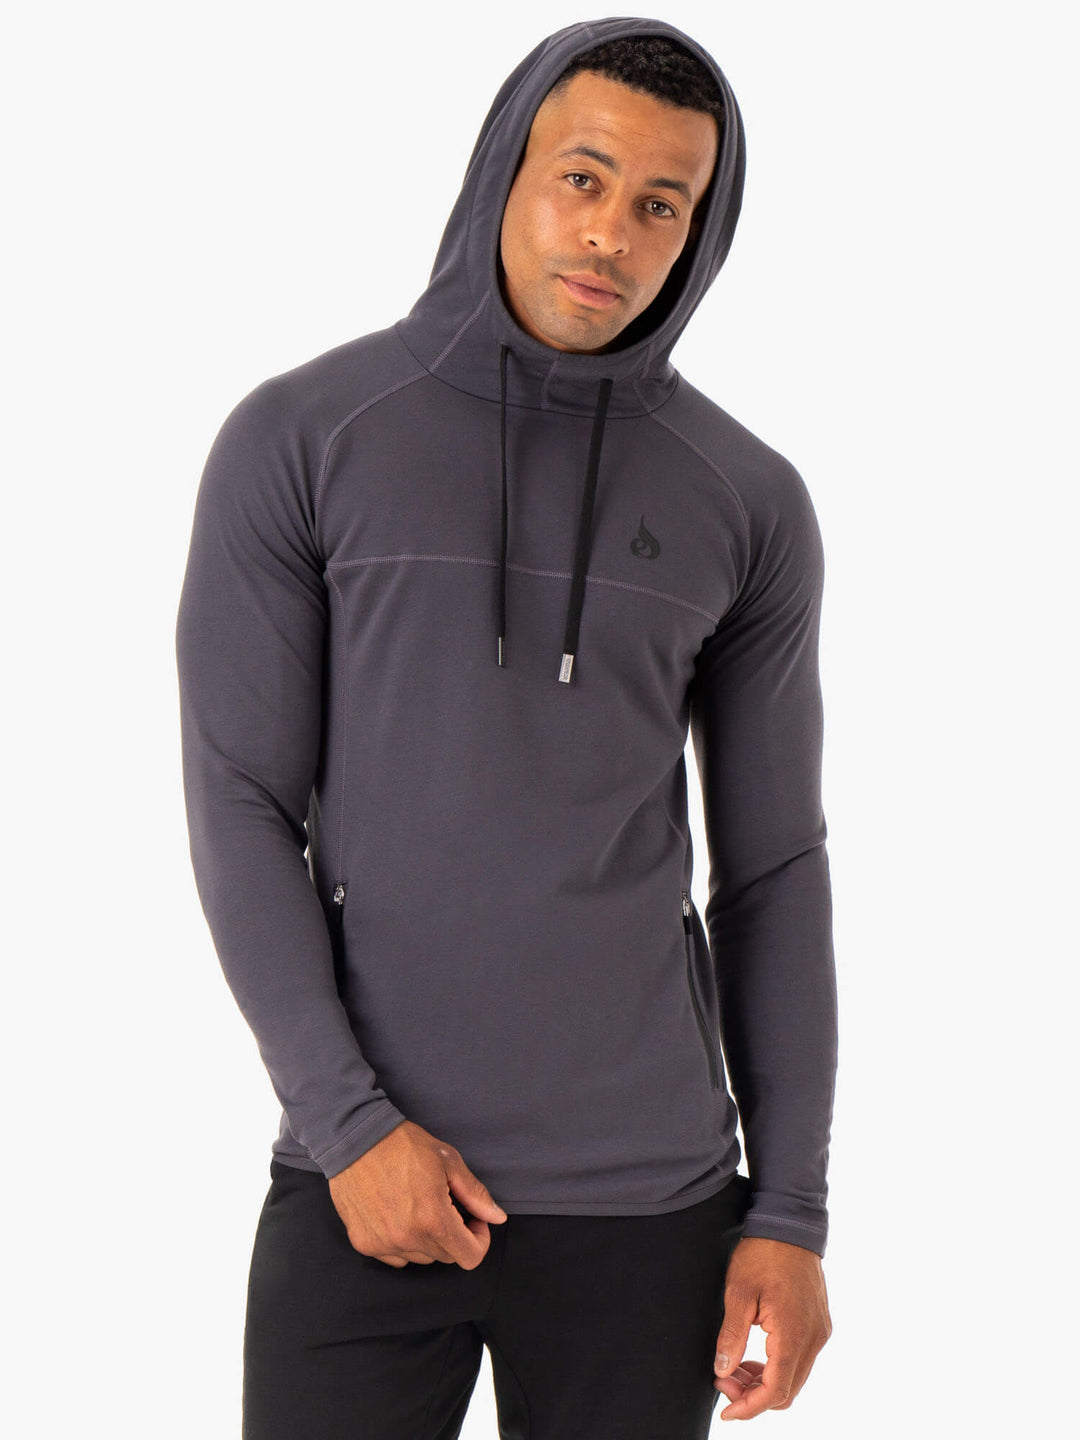 Optimal Pullover Hoodie - Charcoal Clothing Ryderwear 